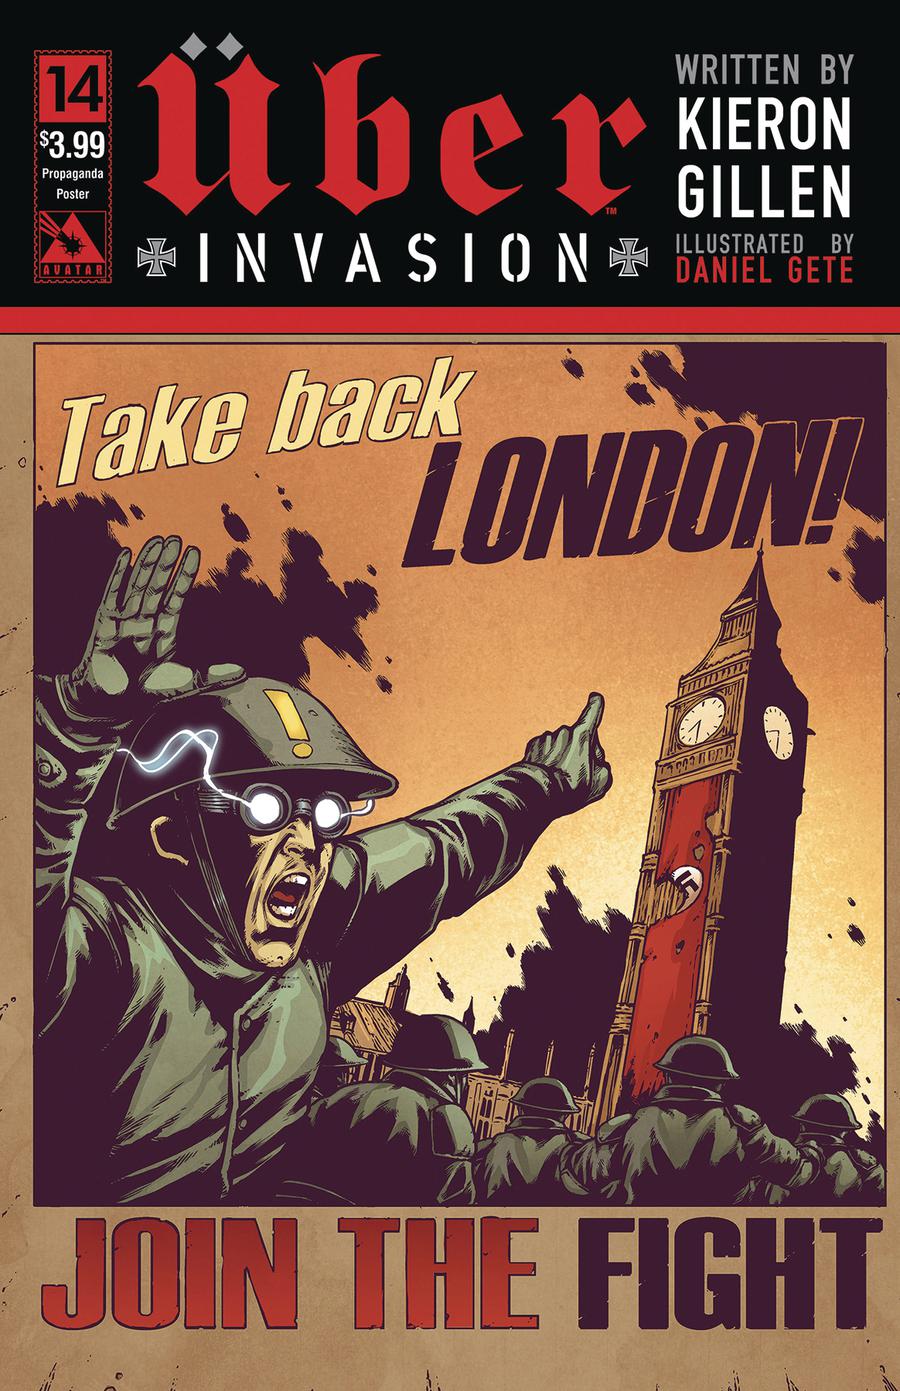 Uber Invasion #14 Cover C Propaganda Poster Cover